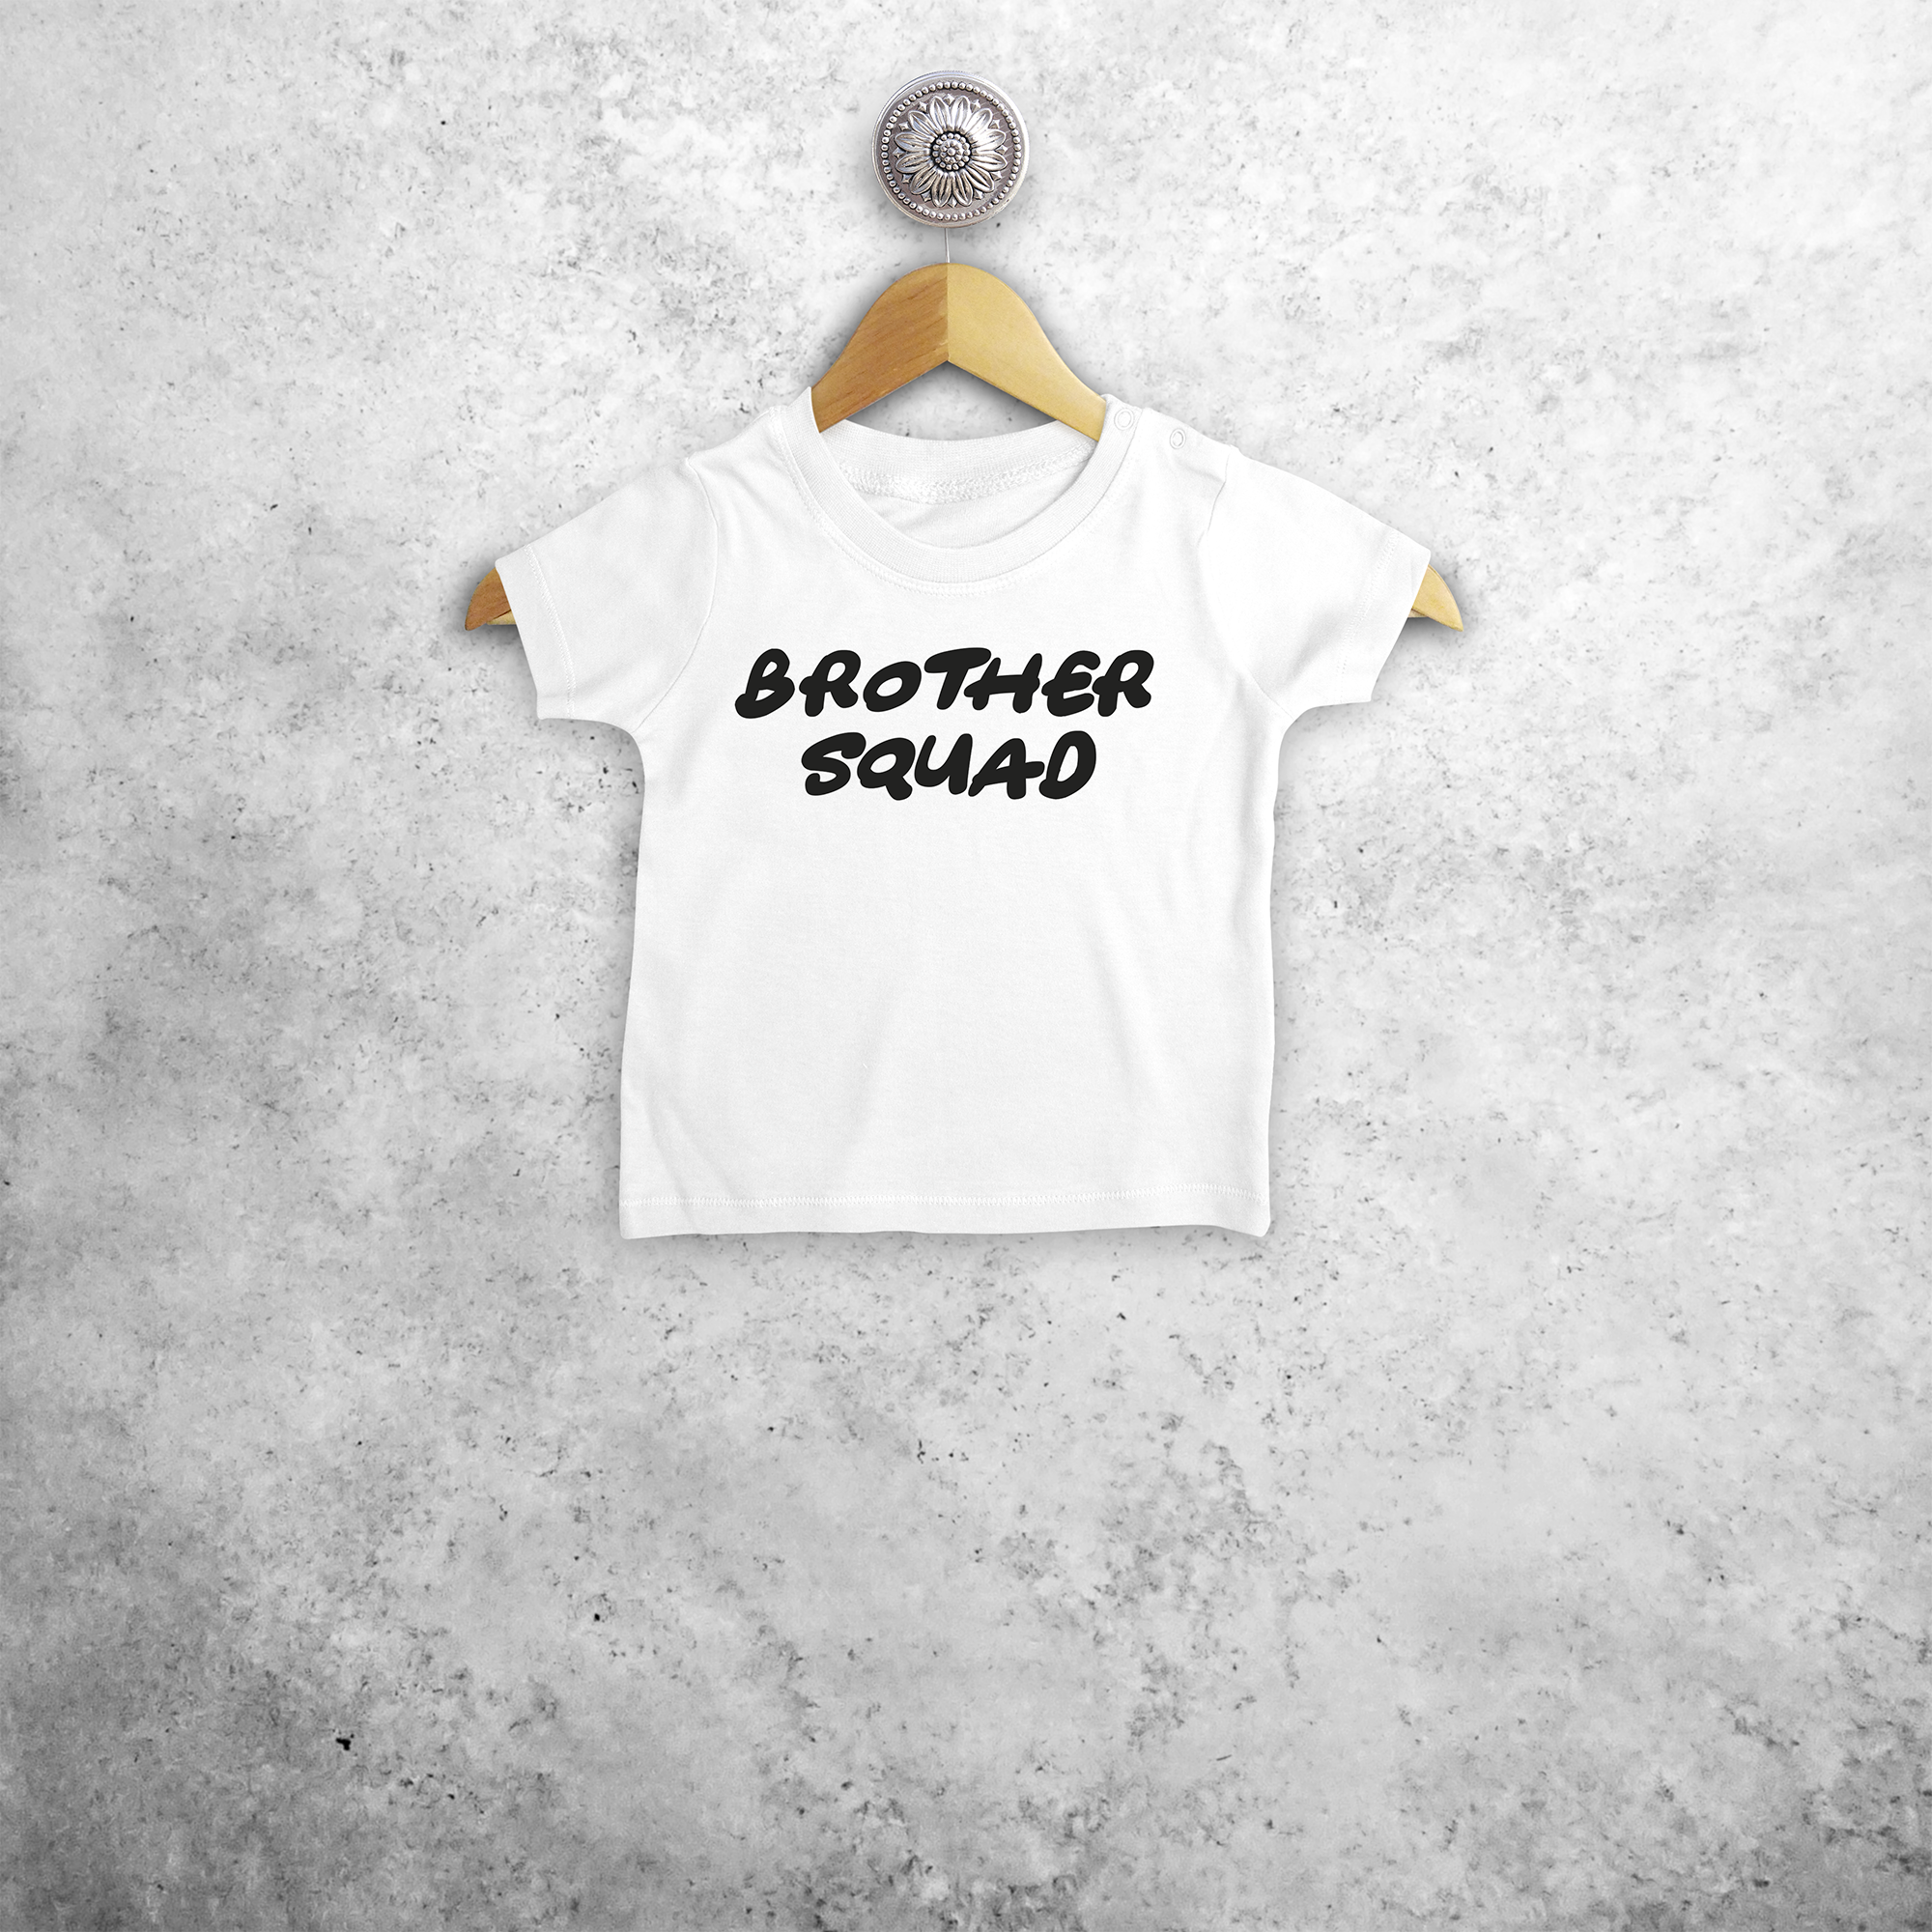 'Borther squad' baby shirt met korte mouwen